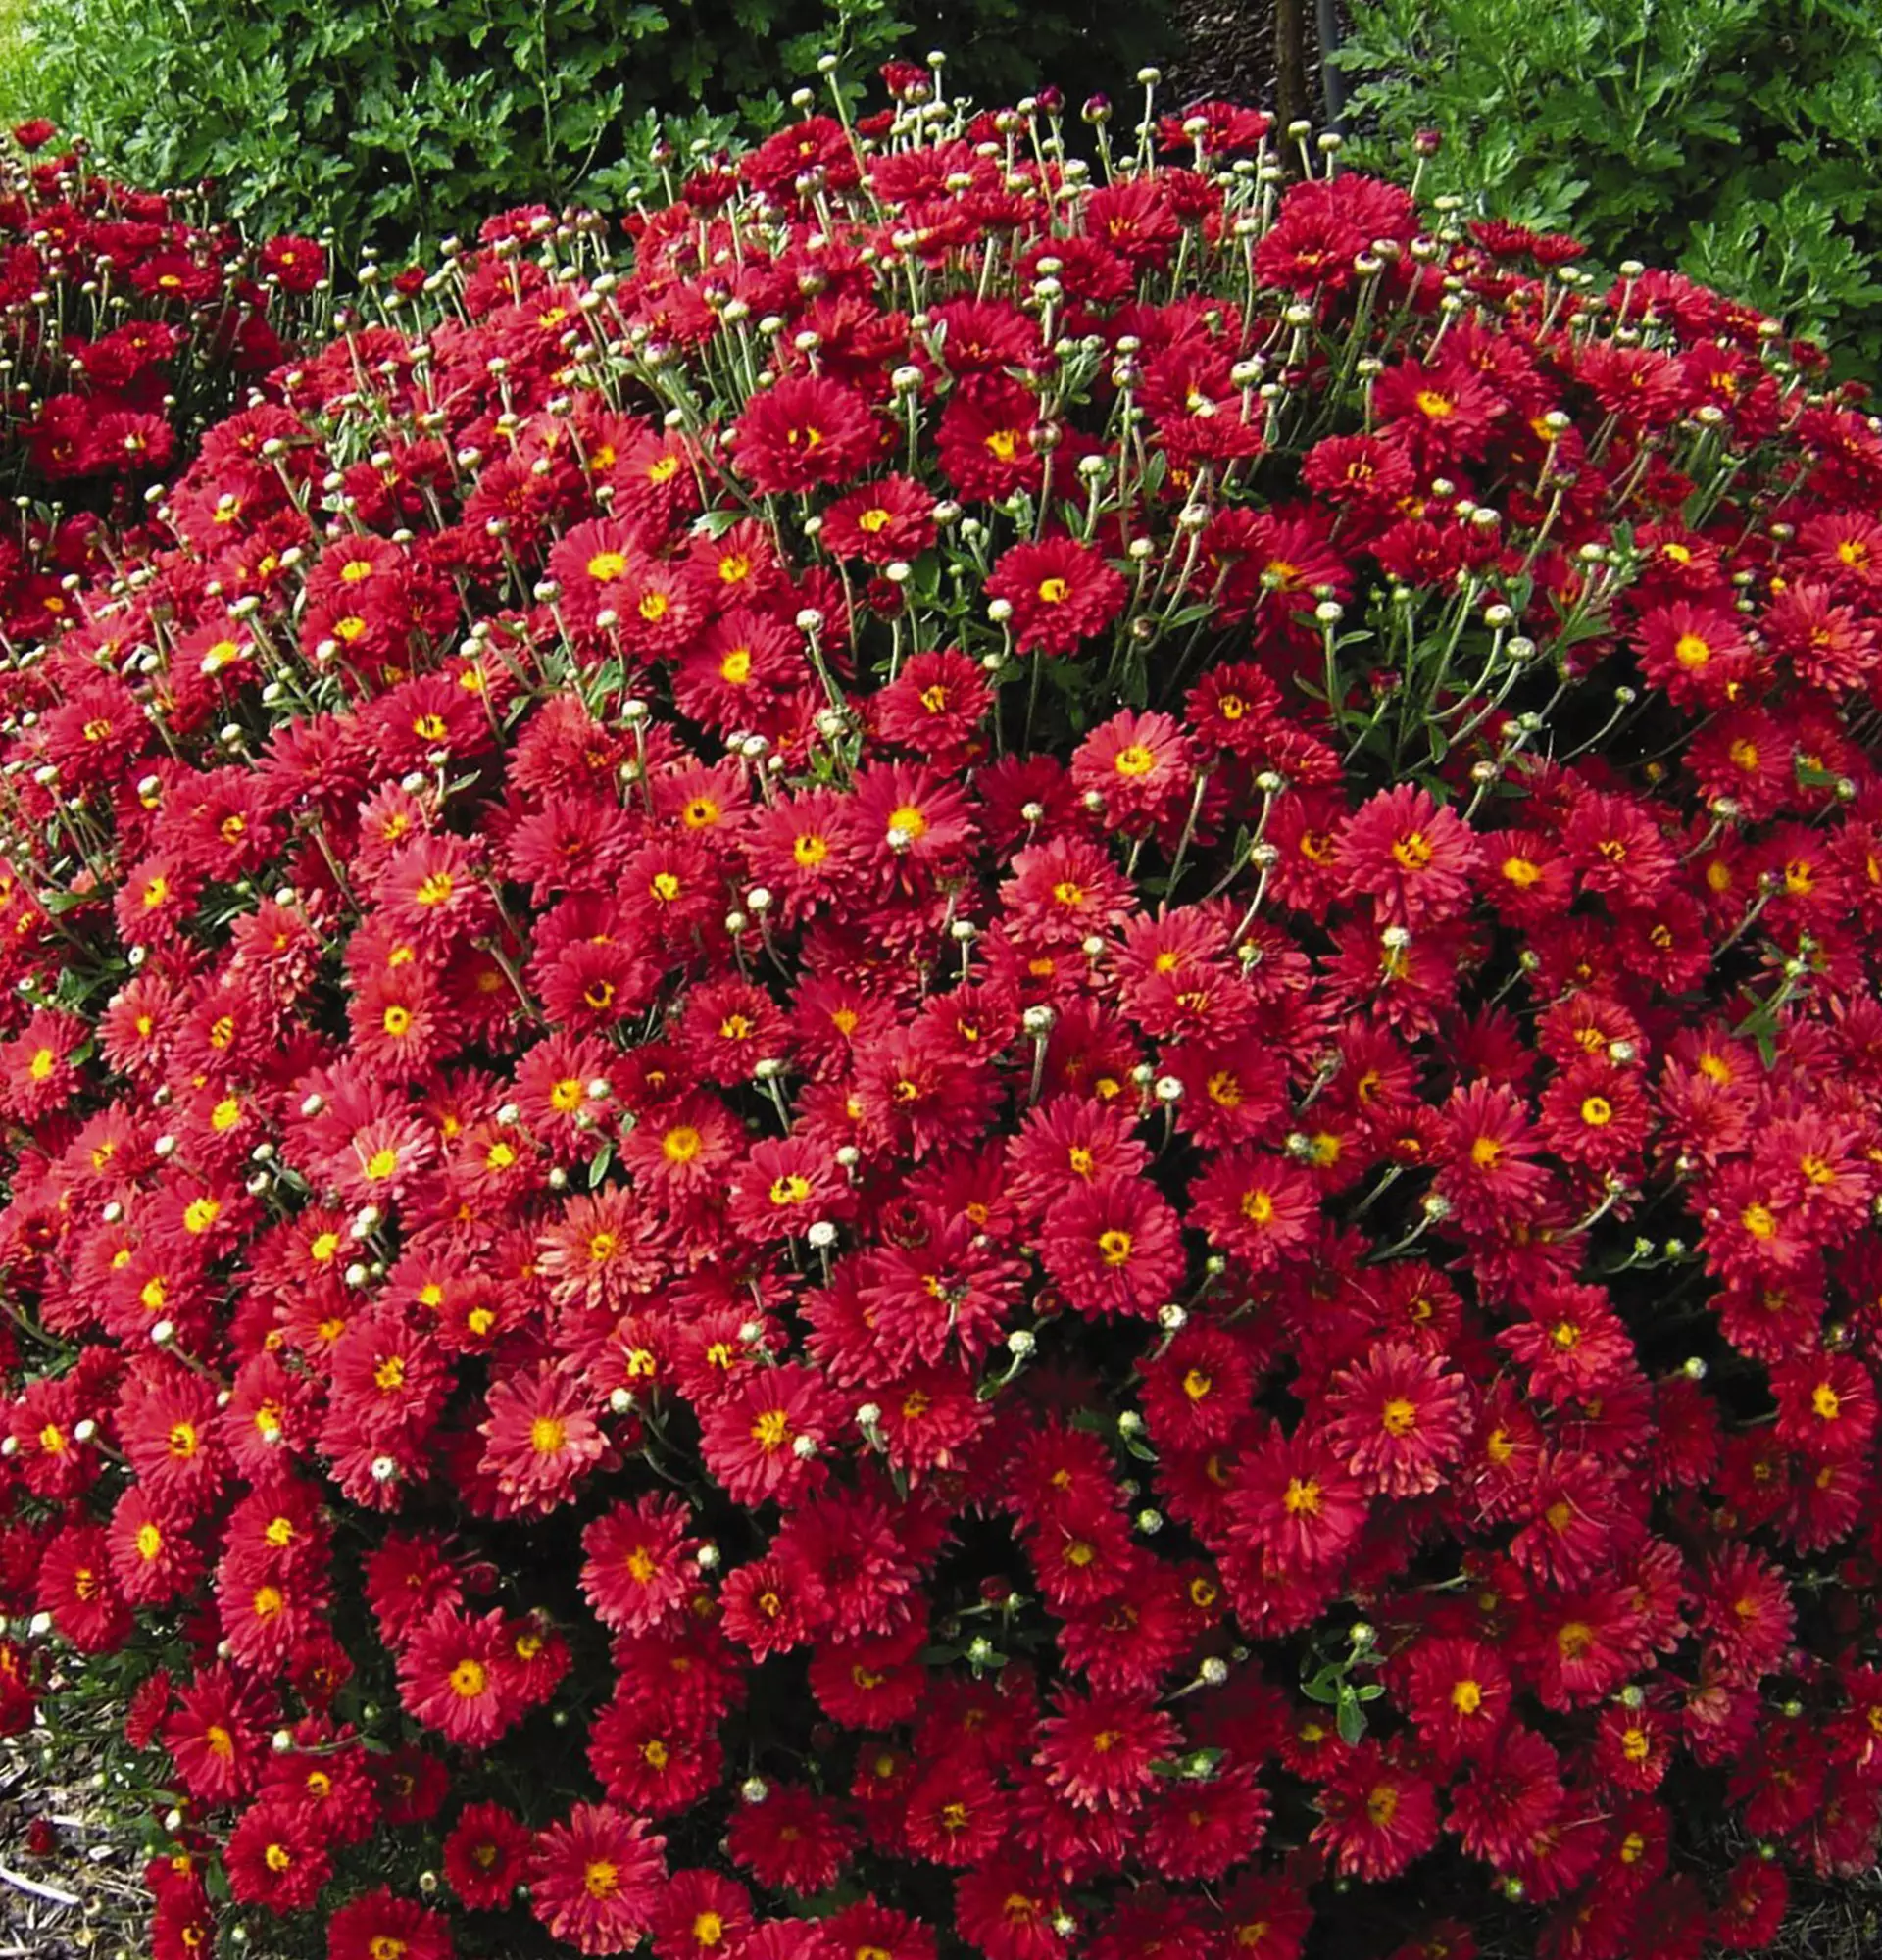 Chrysanthemums spherical photo - red flowers